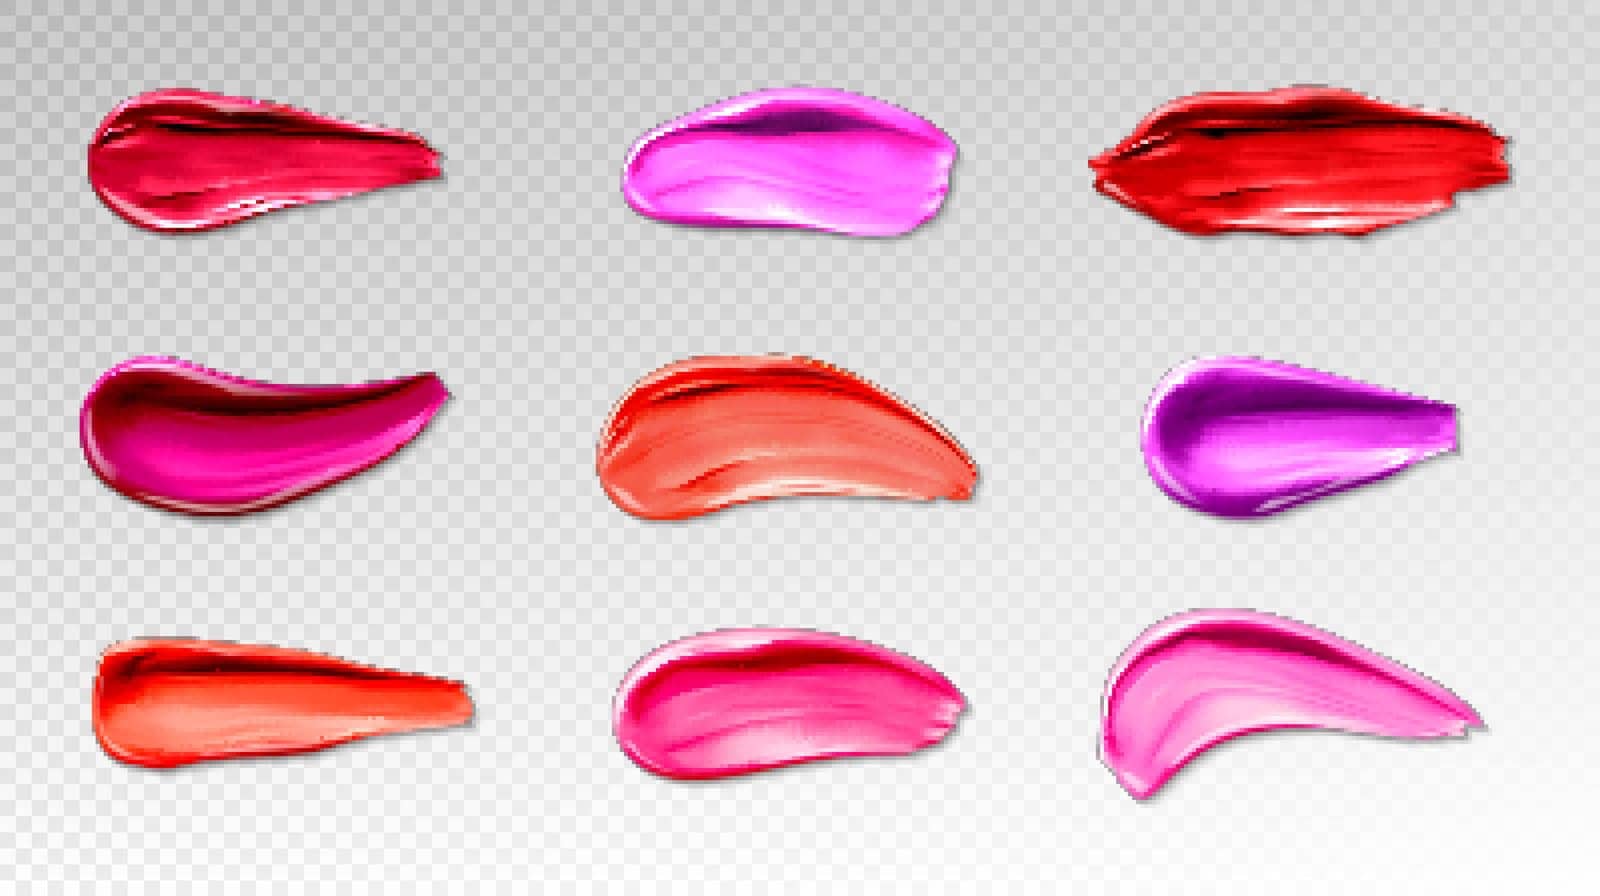 Lipstick swatches, smears of liquid lip gloss by upklyak